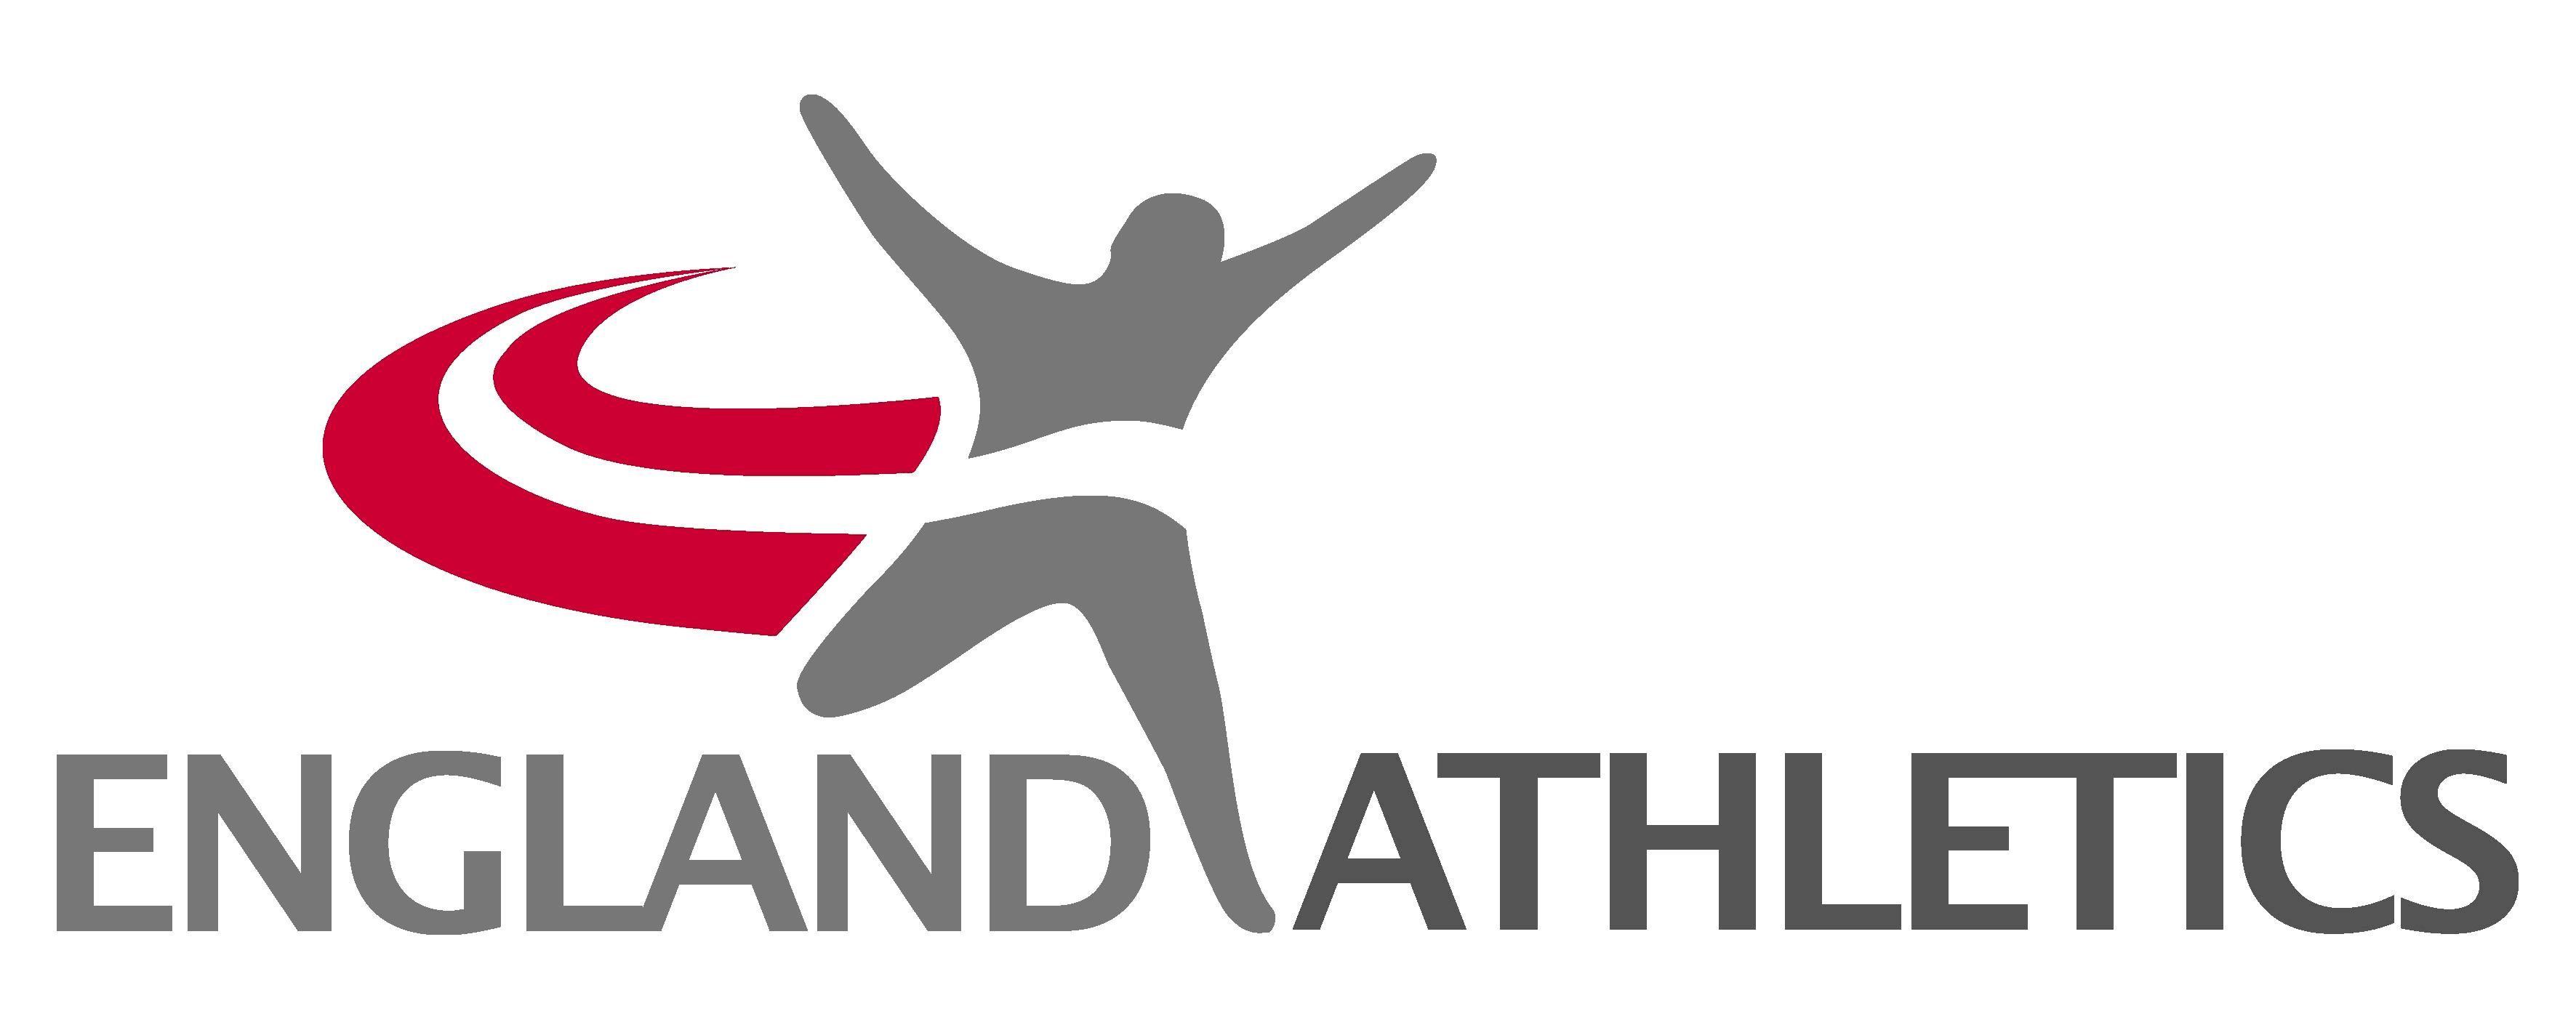 Athletics Logo - England Athletics Logo Running Club